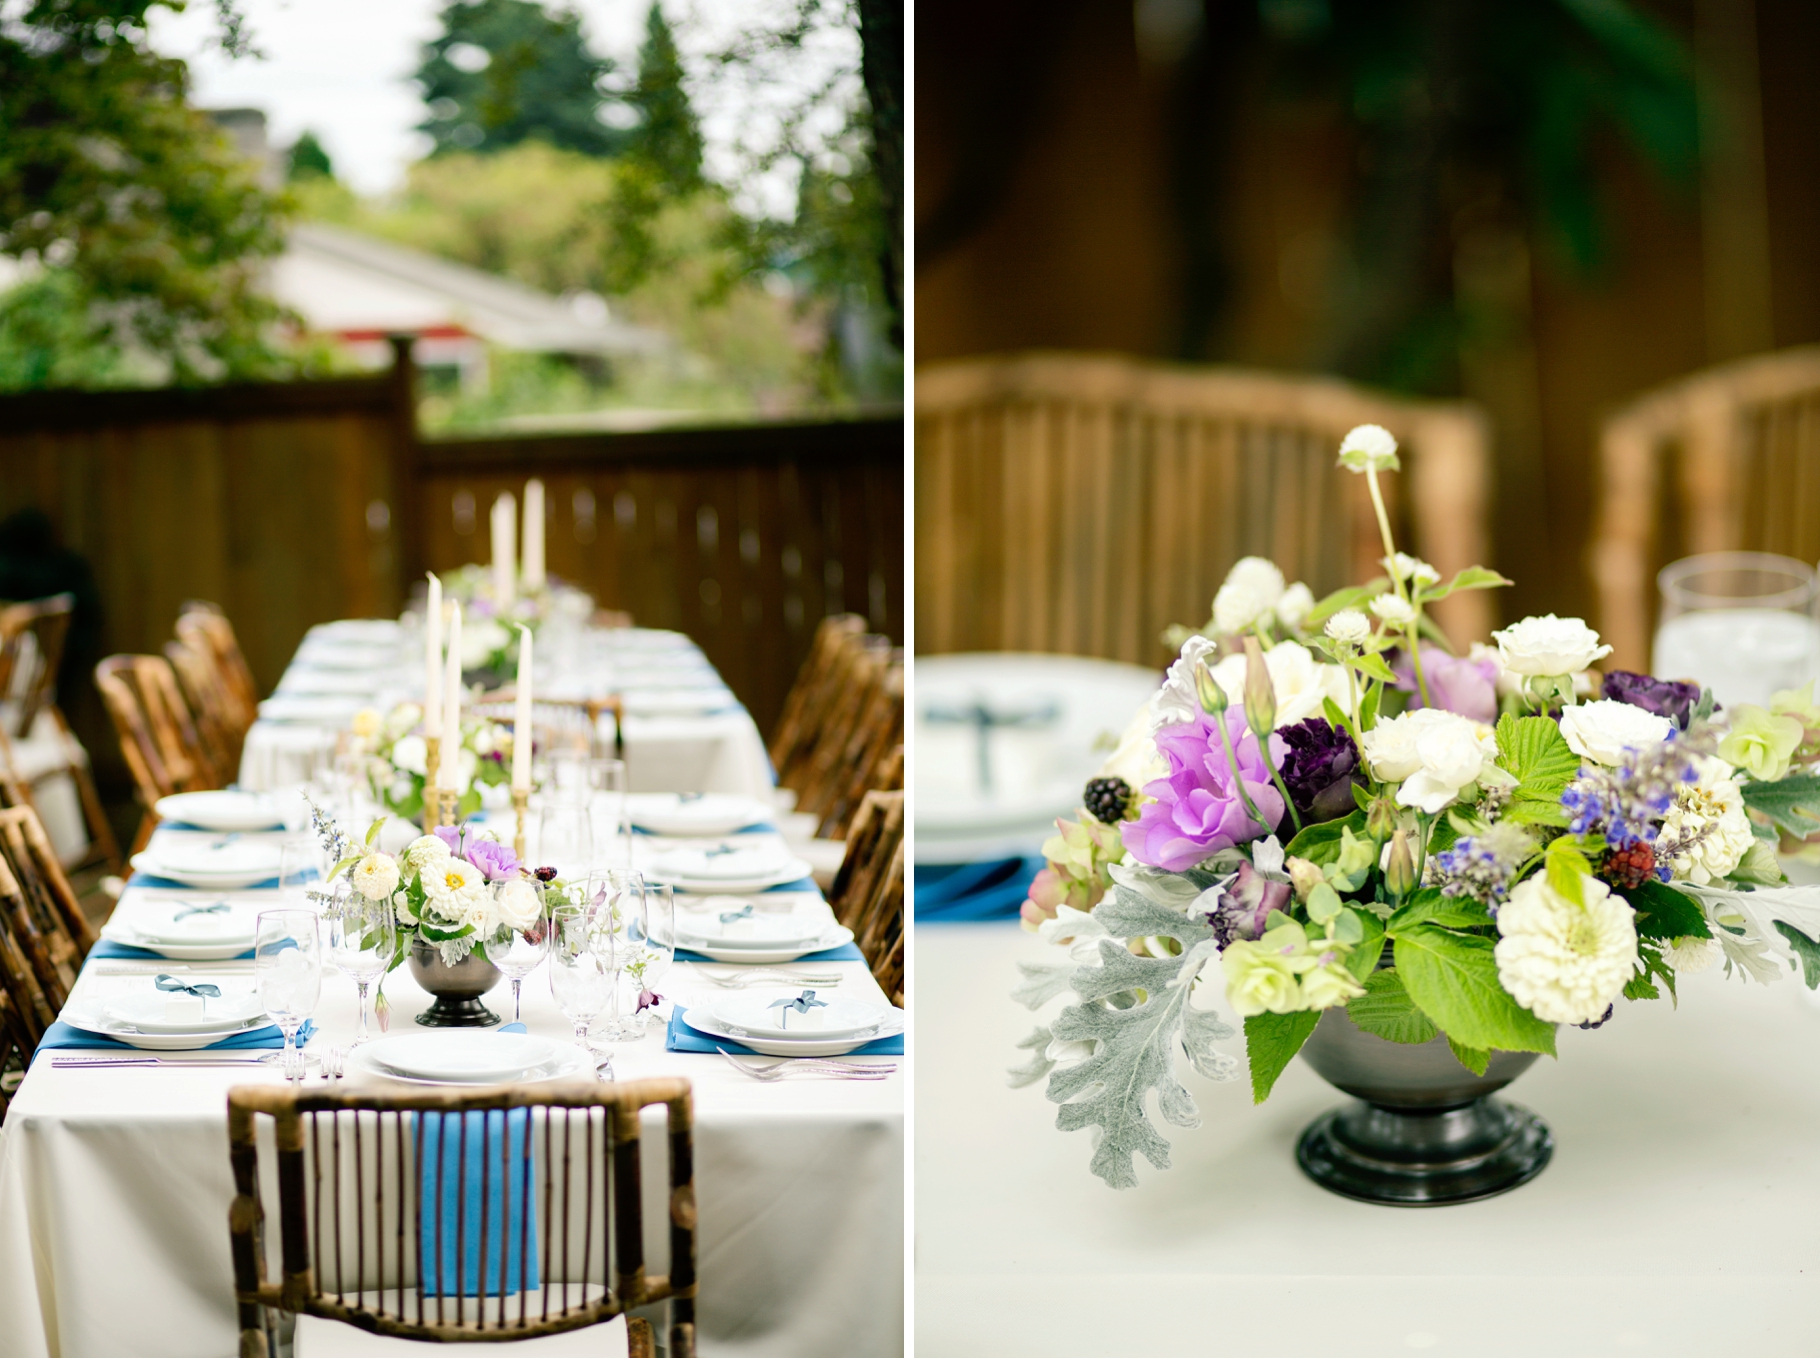 11-Wedding-Celebration-Ballard-Reception-Bride-Groom-Backyard-Garden-Dinner-Figs-Grapes-Calligraphy-Table-Centerpieces-Florals-Photography-by-Betty-Elaine